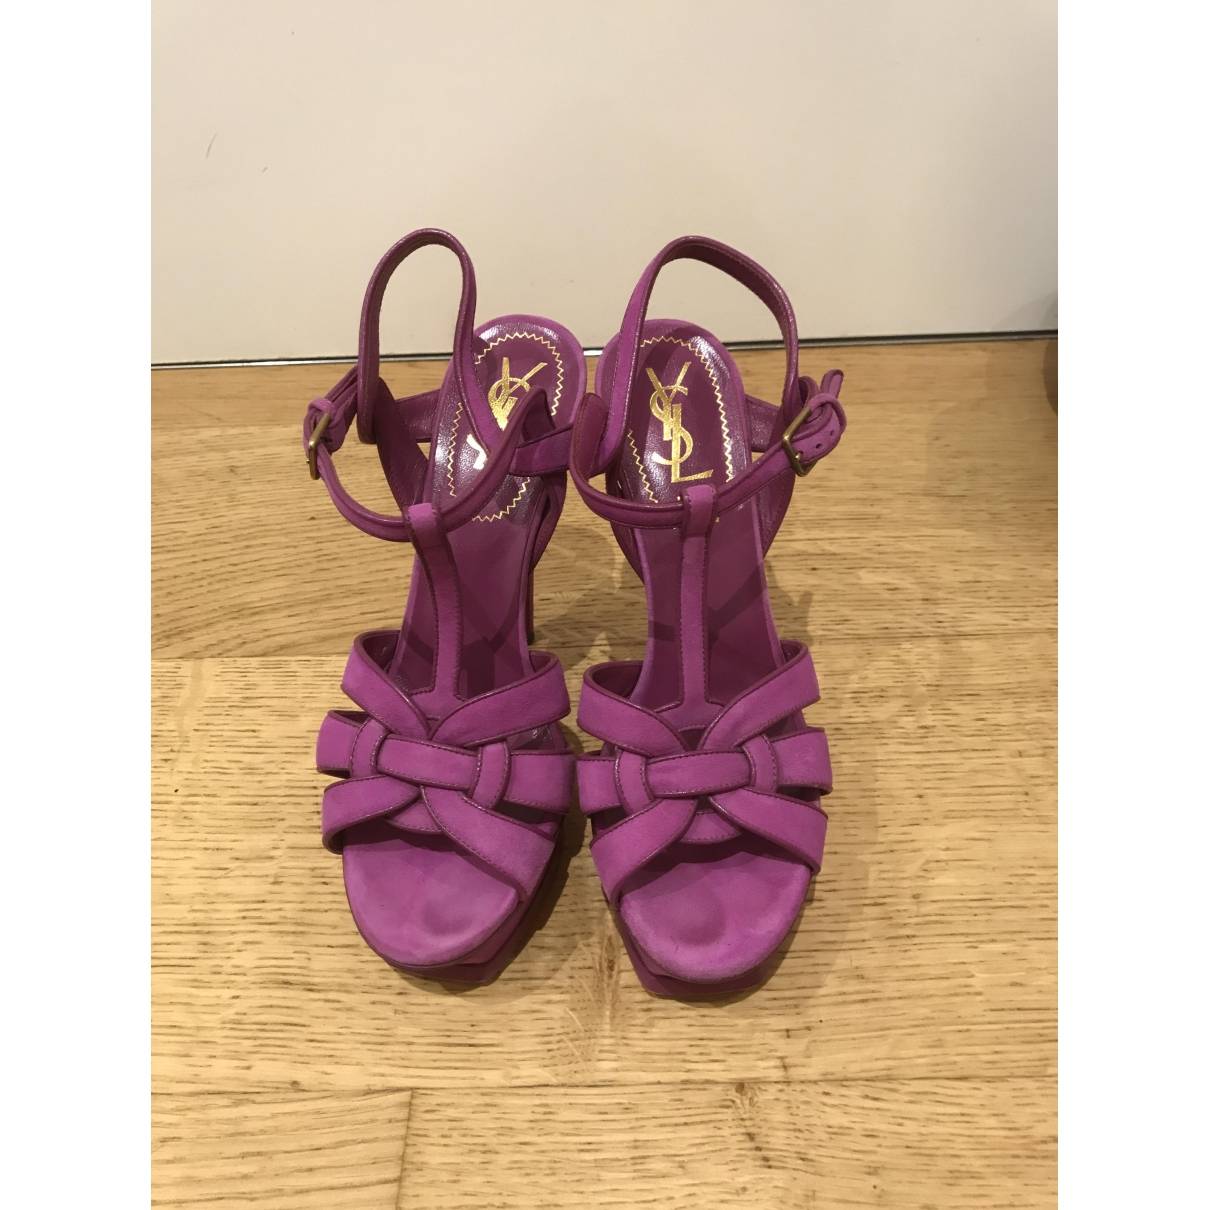 Yves Saint Laurent Tribute sandals for sale